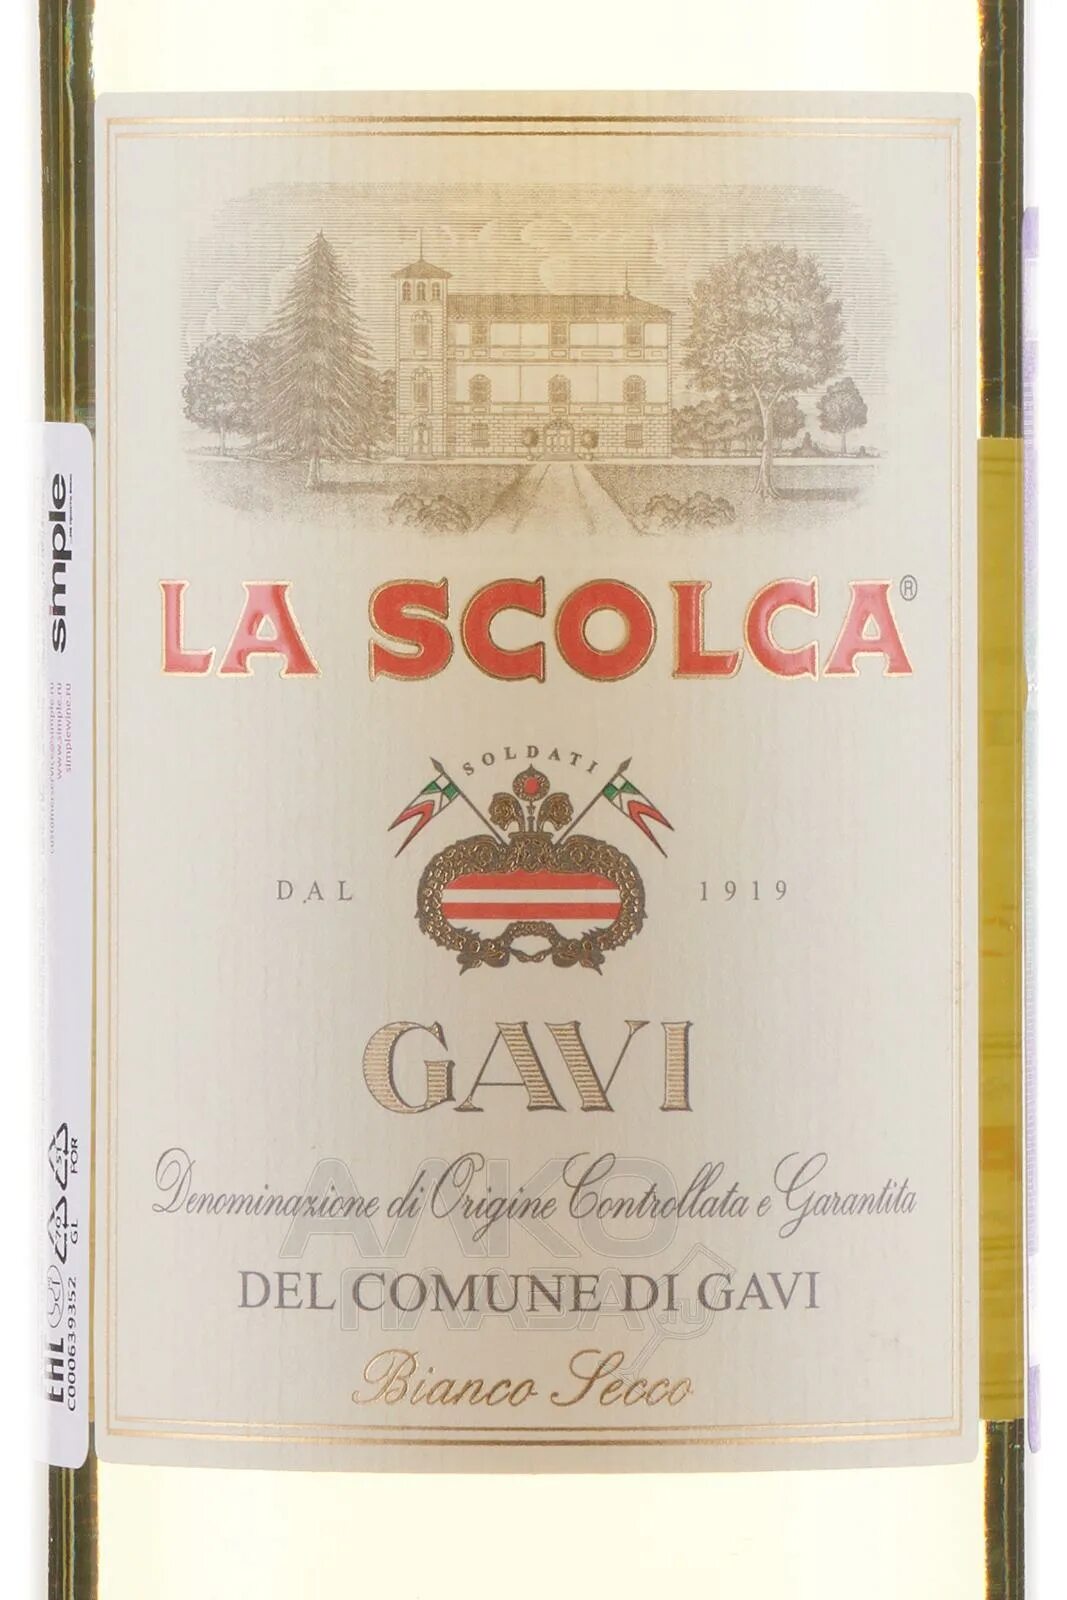 La scolca вино цена. Вино белое la Scolca. Итальянское вино Гави. Гави ла сколька. Вино Гави ди Гави ла Scolca.